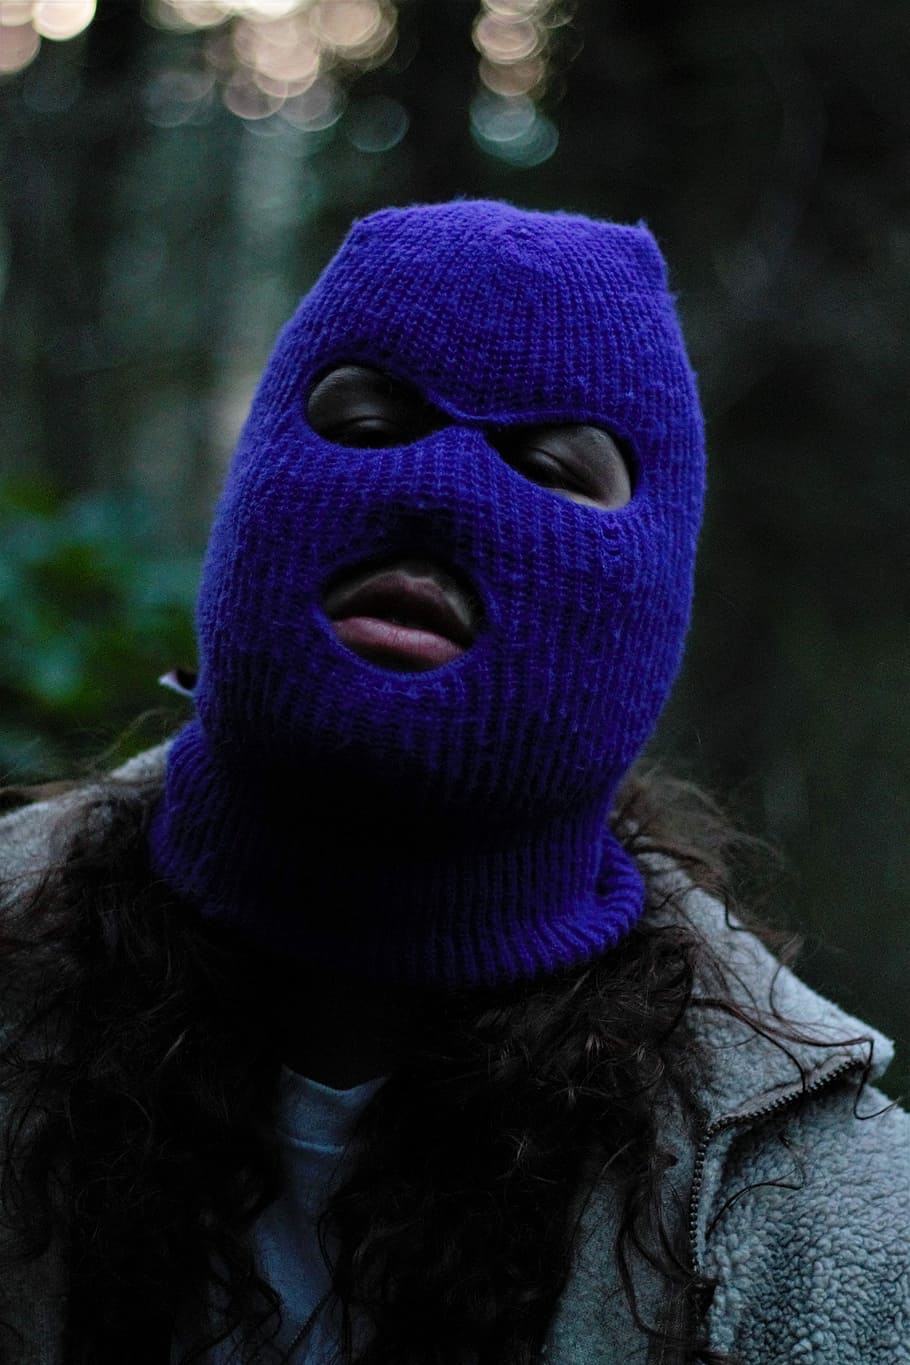 HD wallpaper: person wearing purple balaclava, ski mask, head